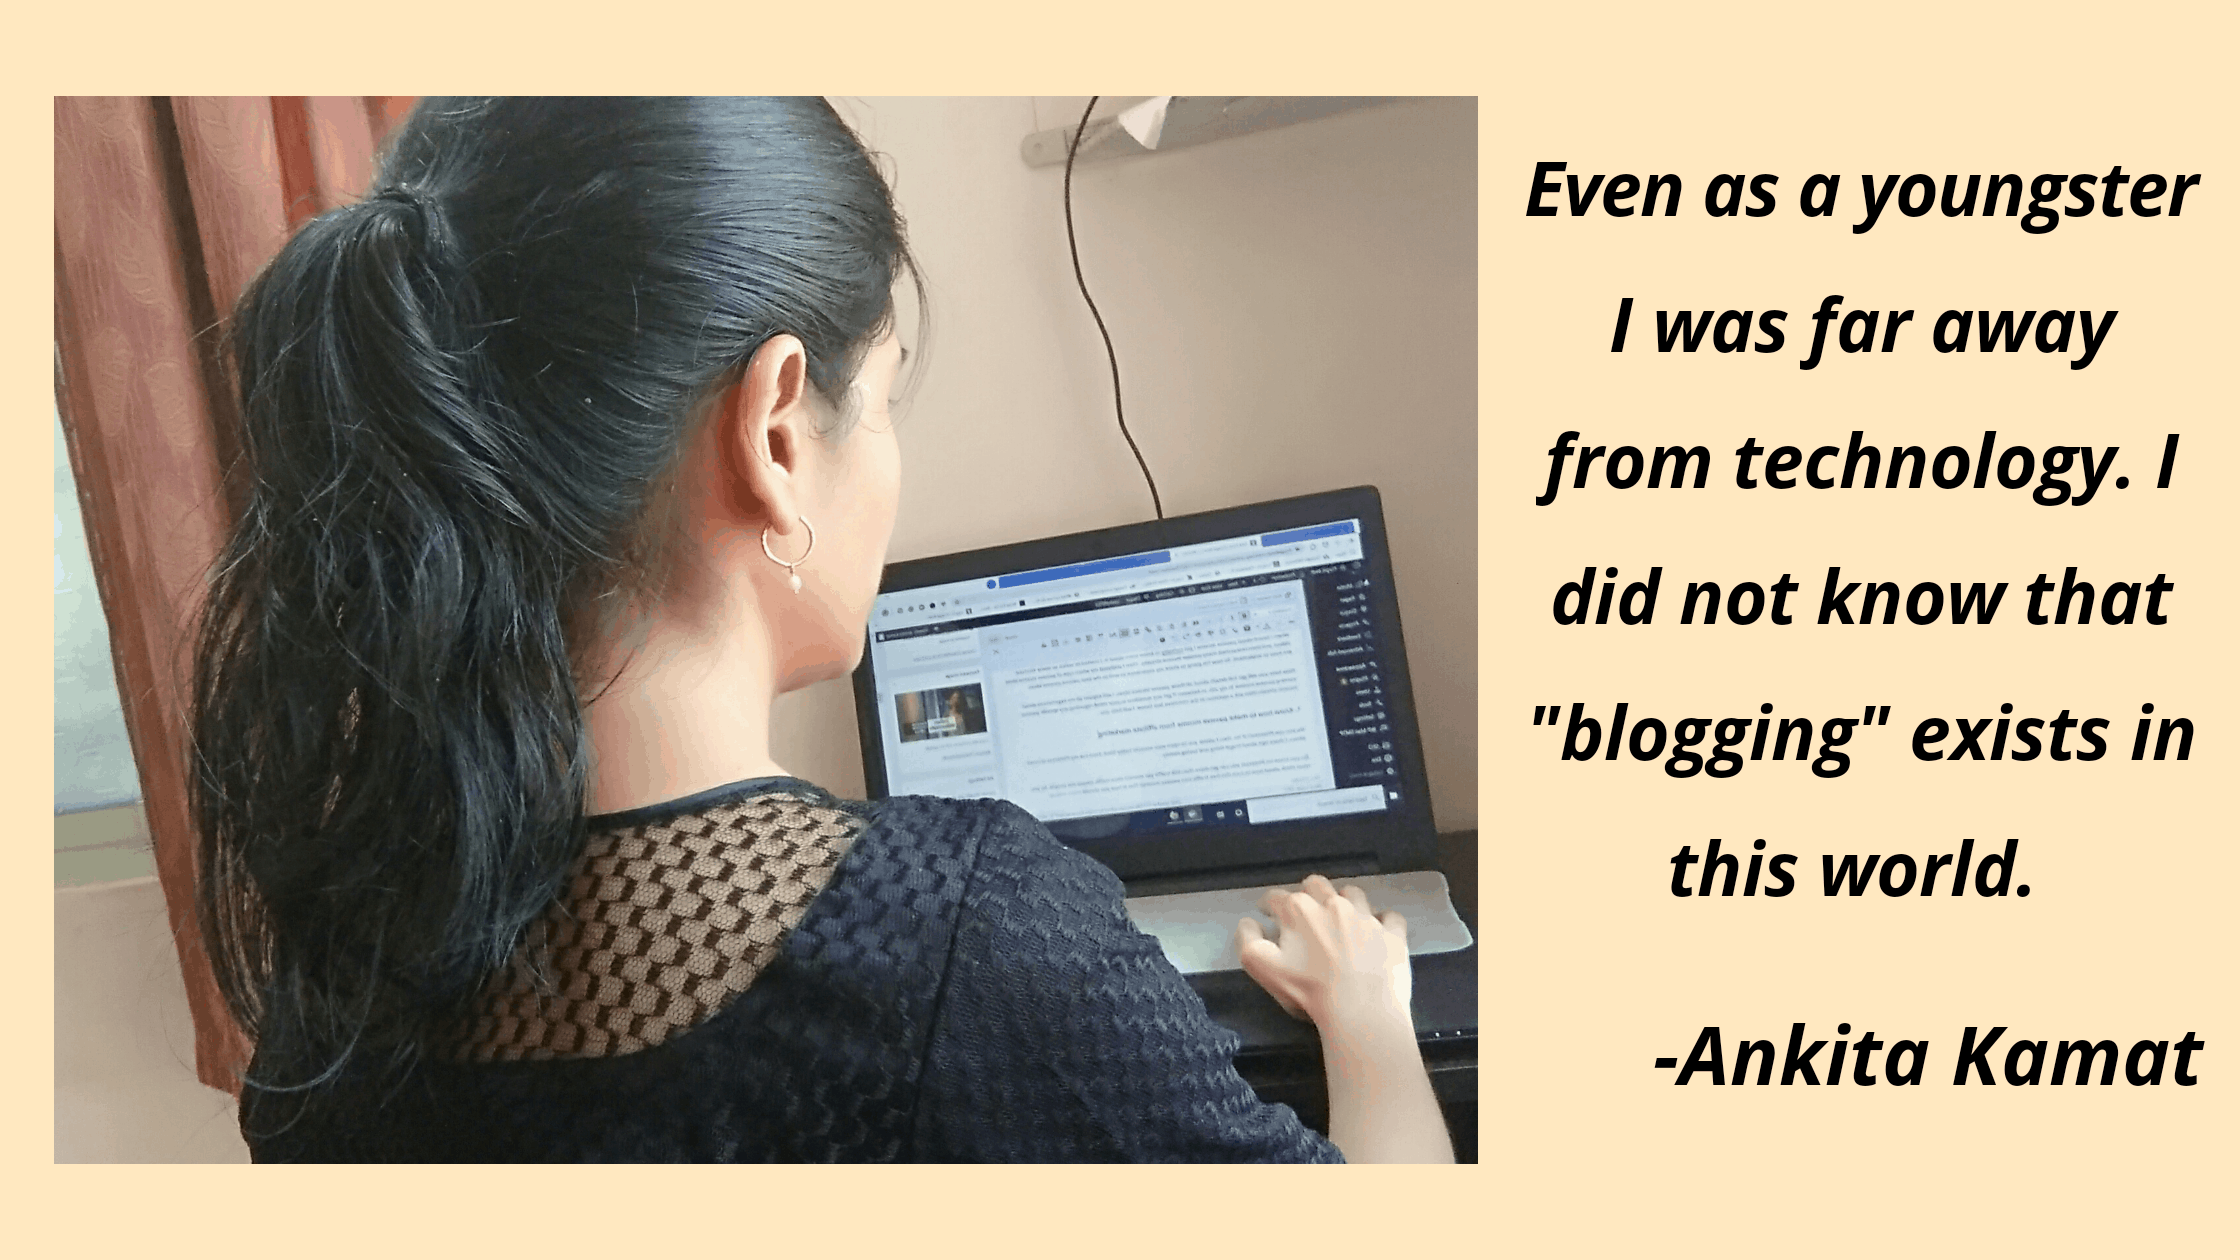 Ankita Kamat's Journey as a Blogger